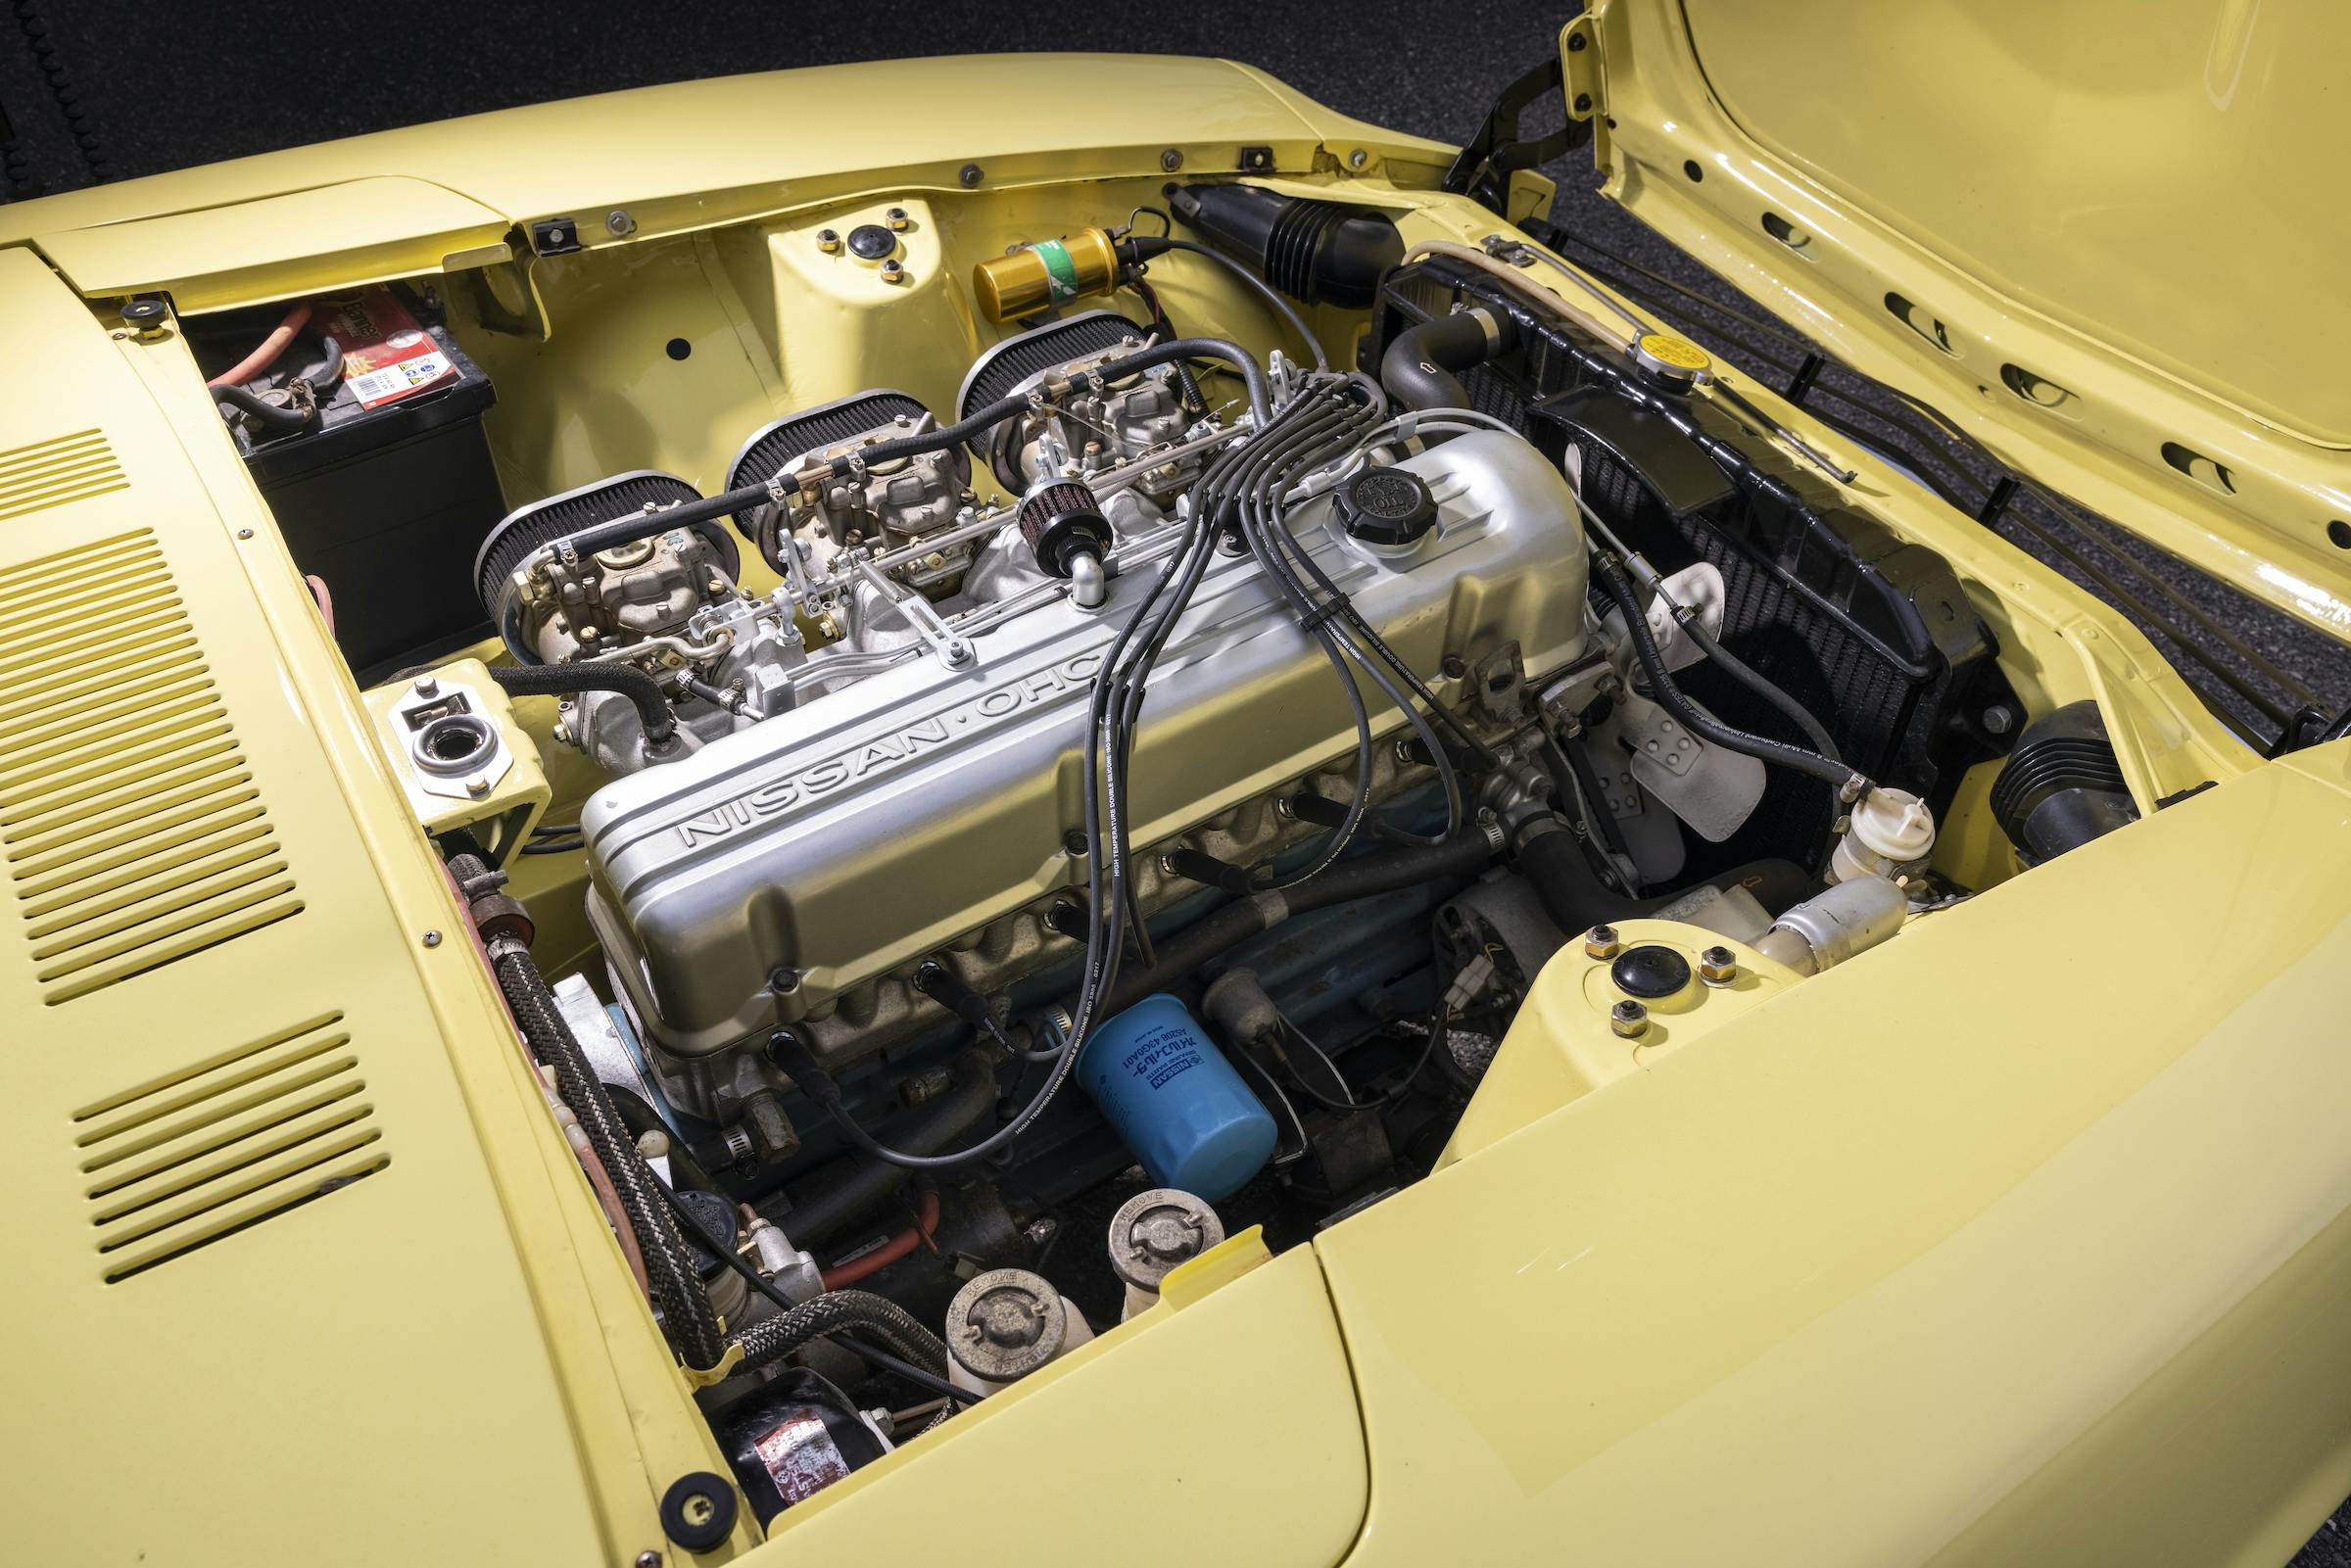 Datsun 240Z engine bay